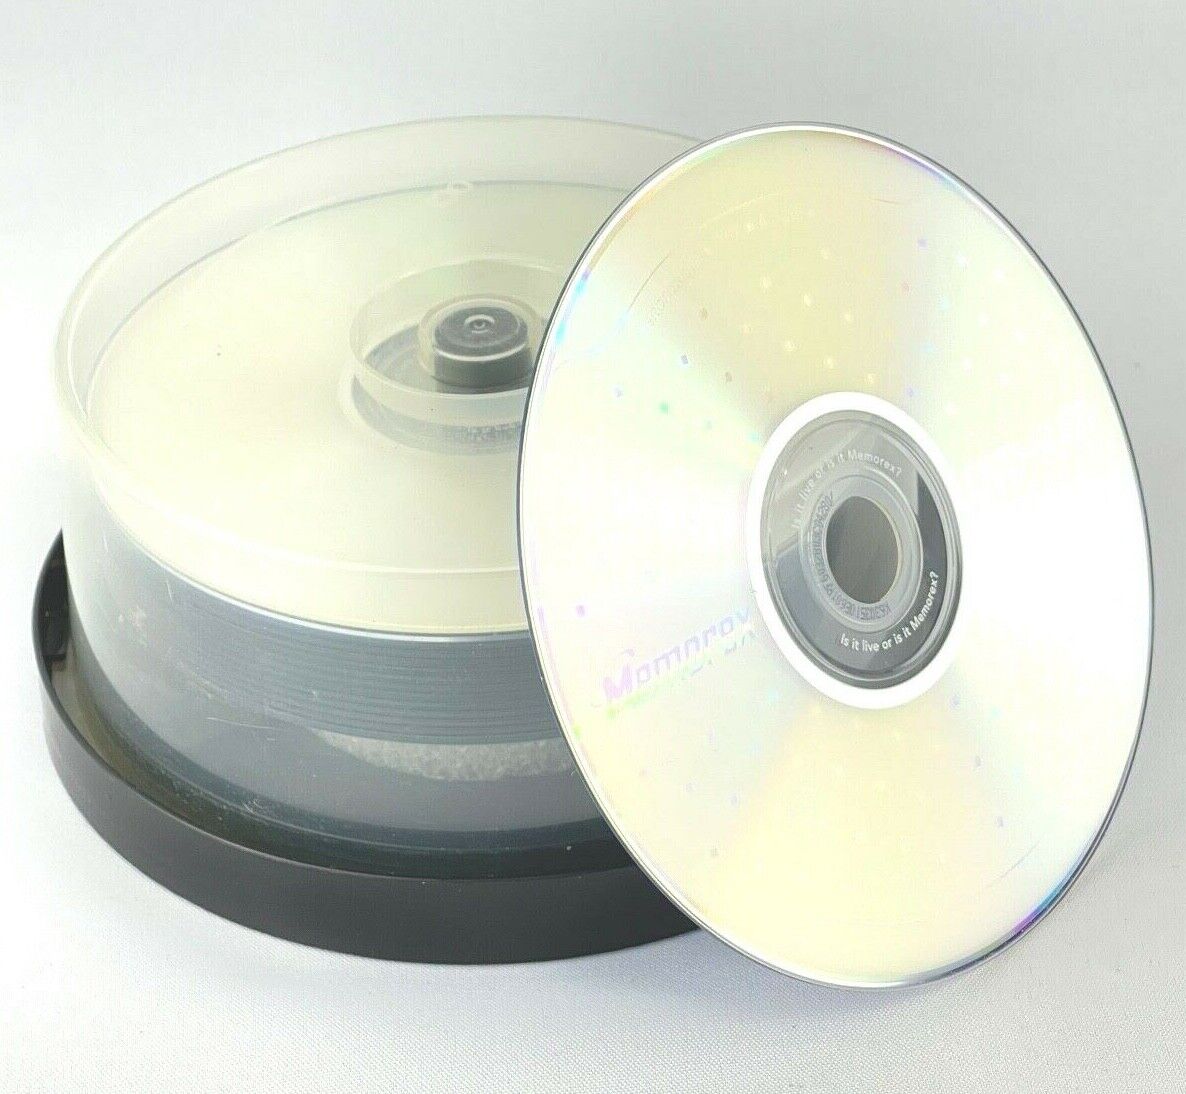 Memorex Dvd+r 16x 4.7 Gb 120 Min Discs 15 Pcs Open Pack